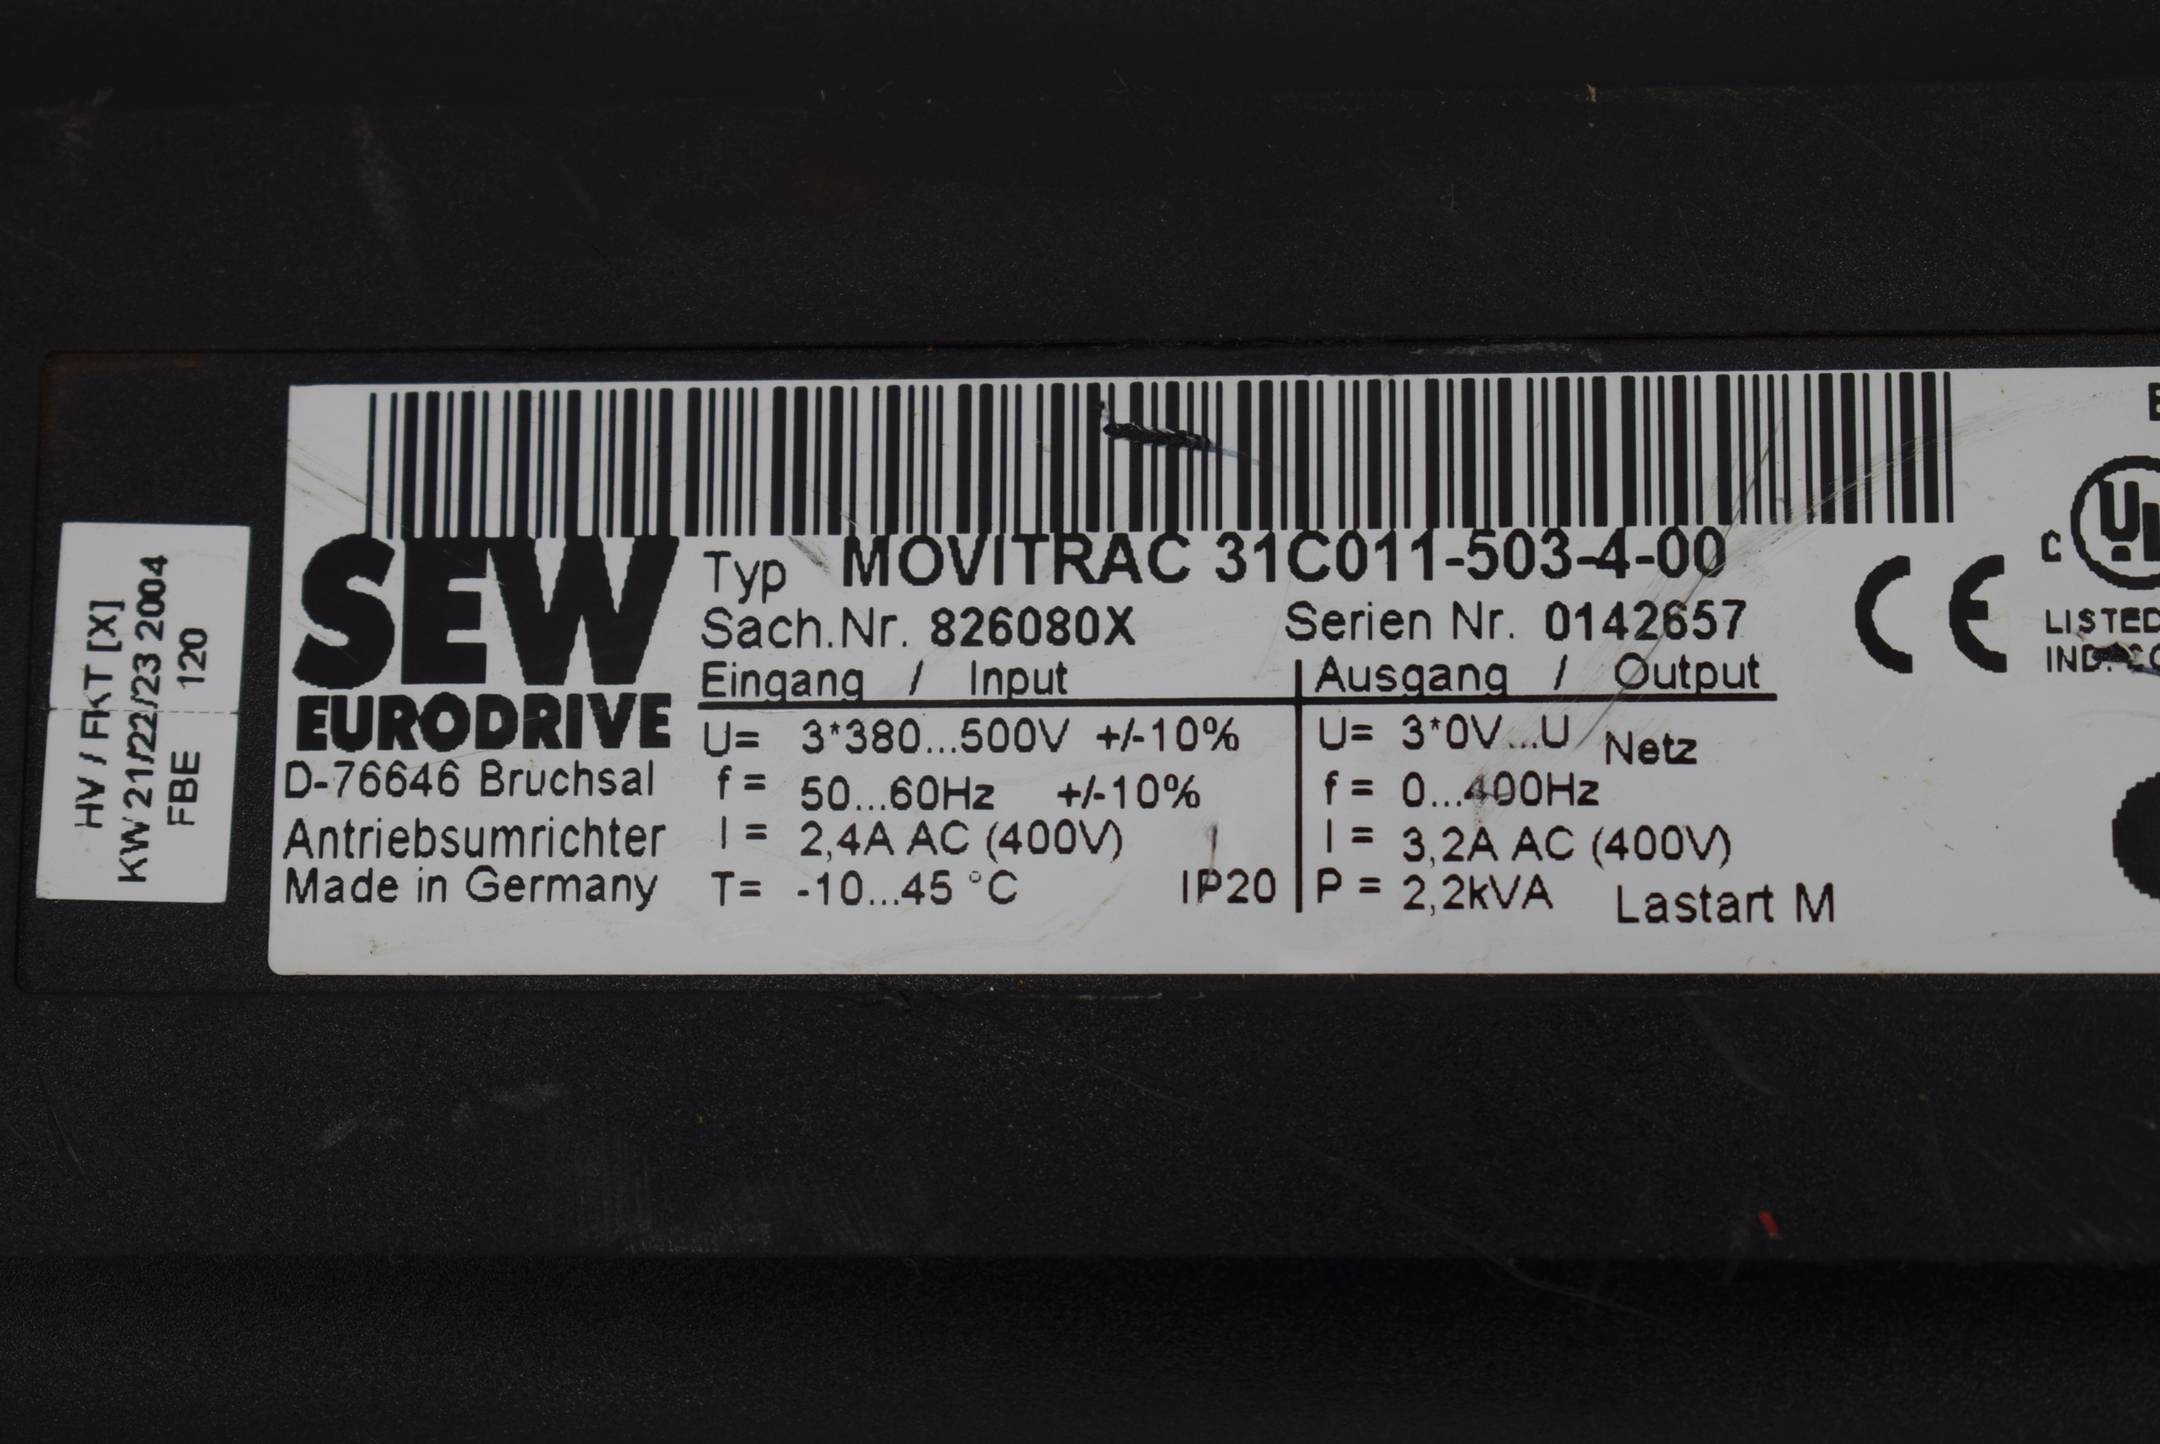 SEW Eurodrive Antriebsumrichter Movitrac 31C011-503-4-00 